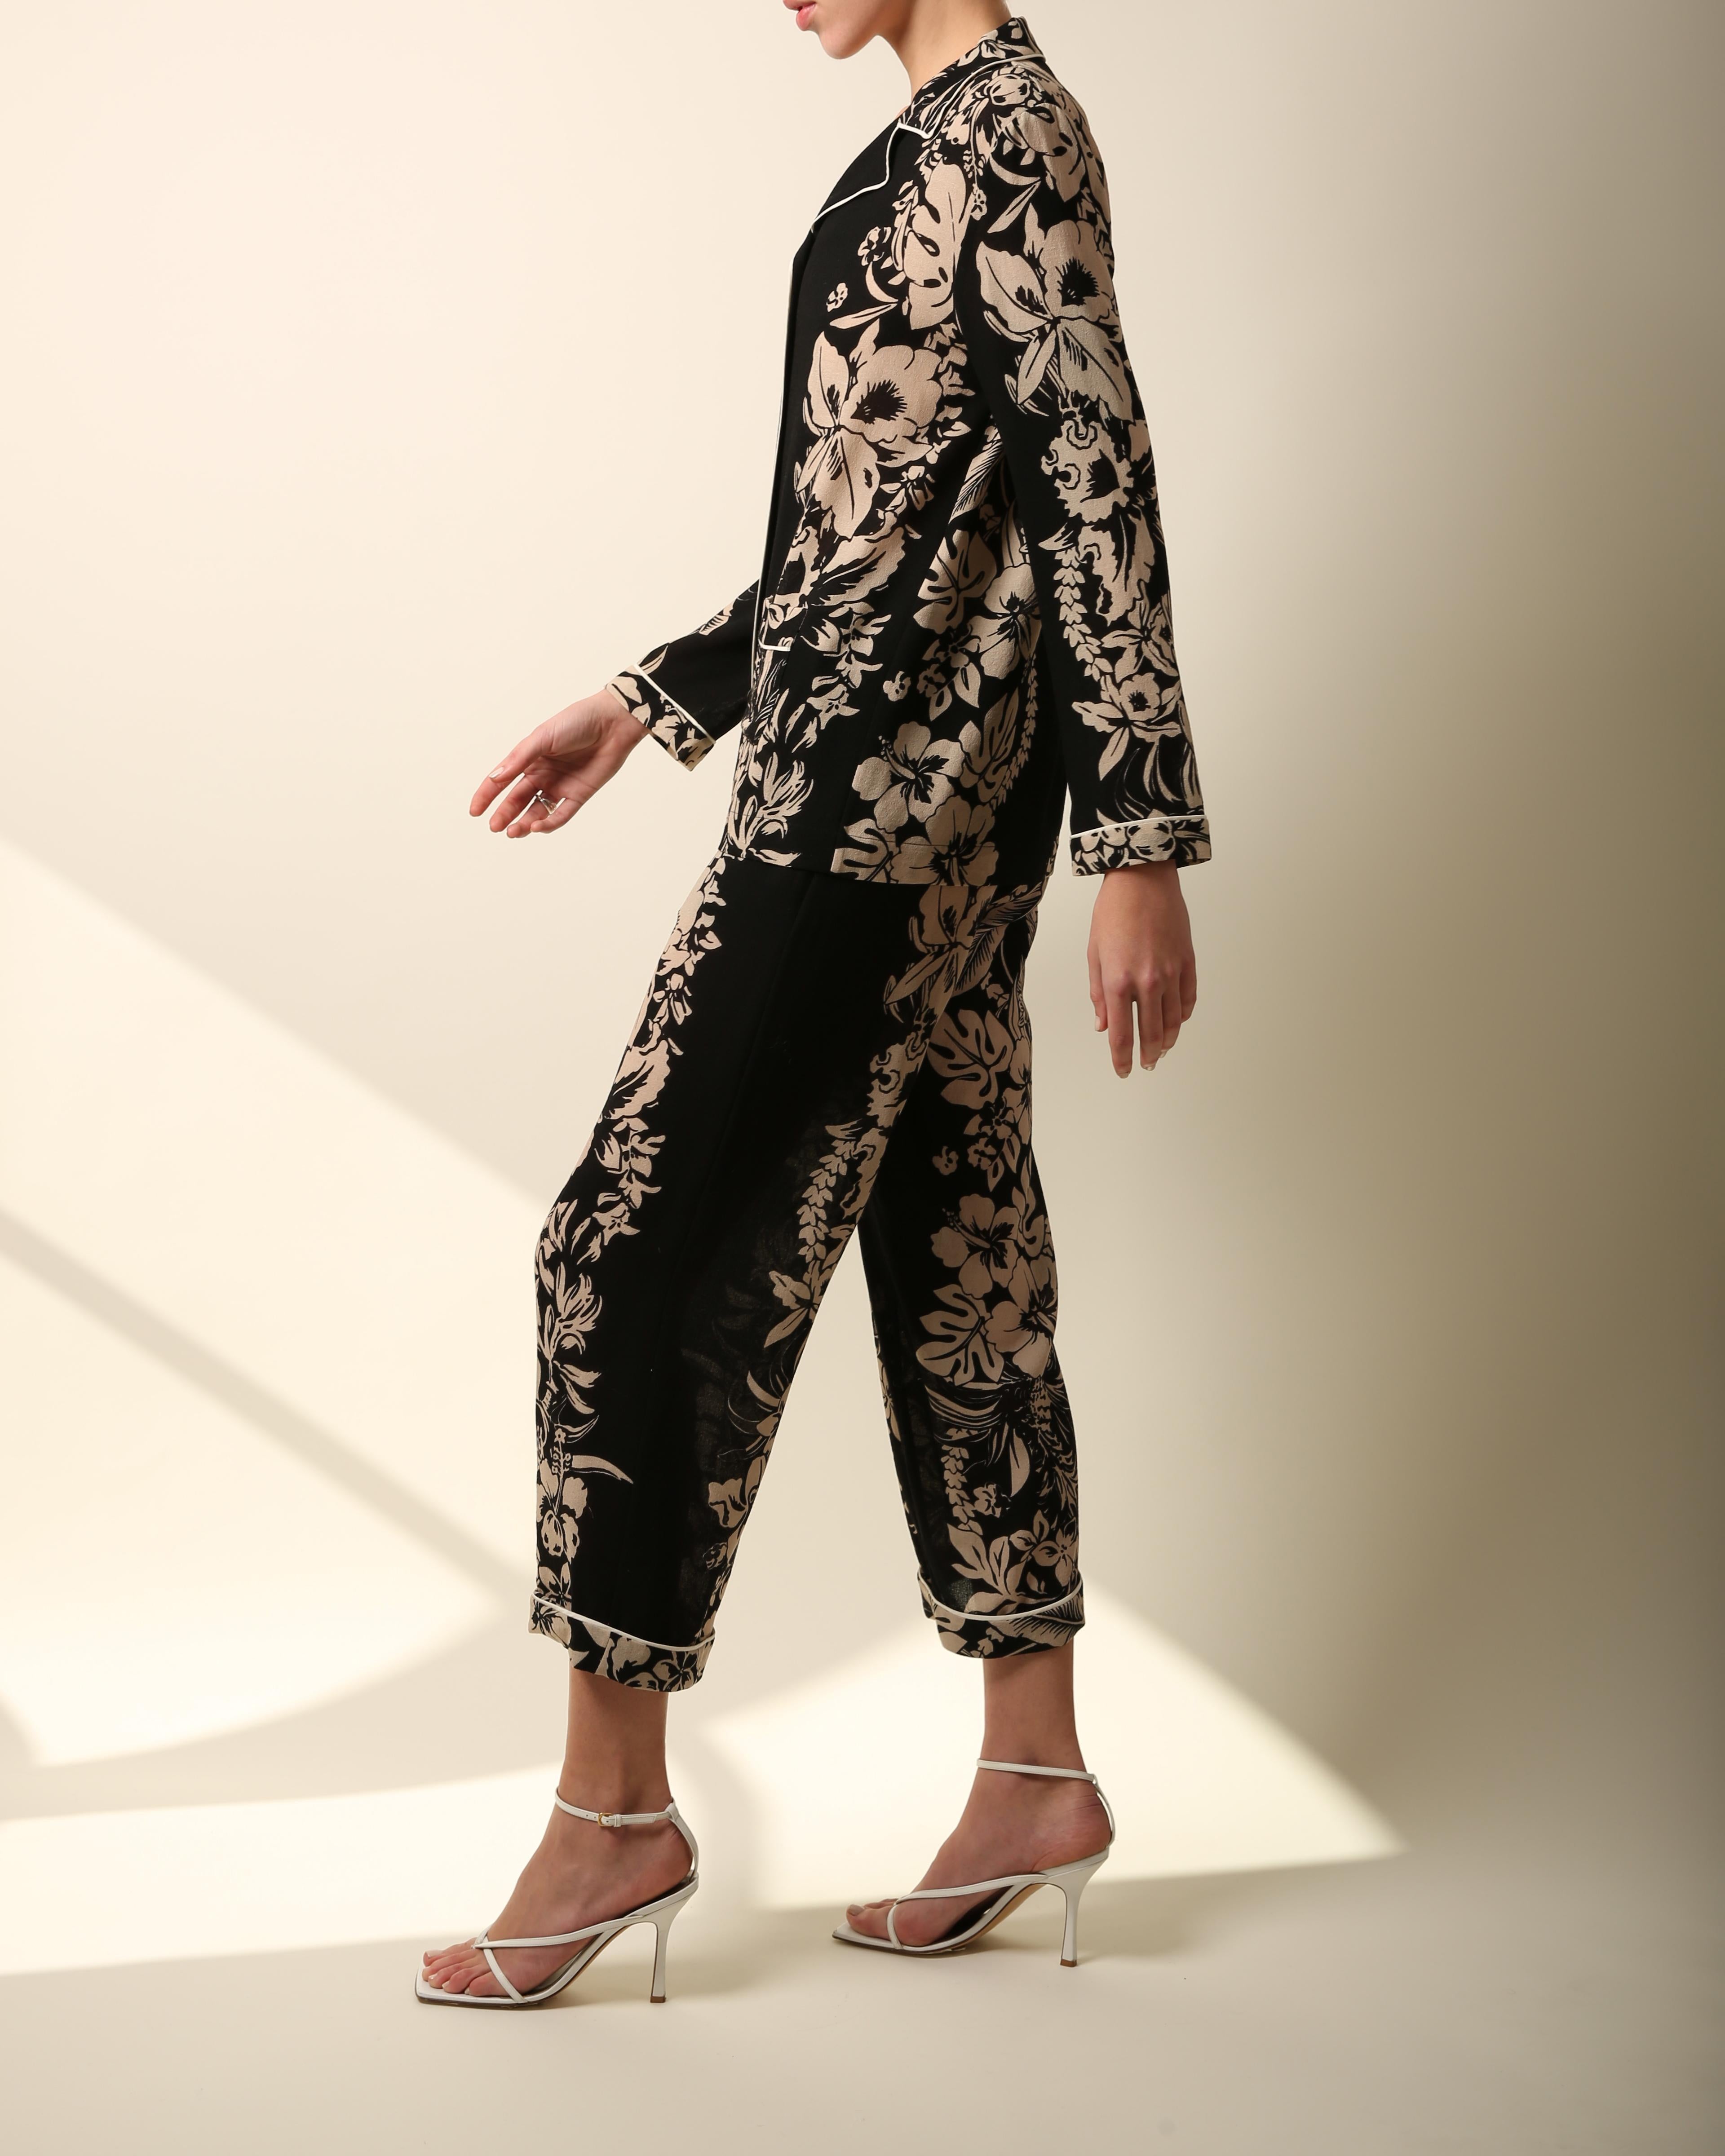 Valentino pyjama style black nude floral print blouse wide dress pants jumpsuit For Sale 8